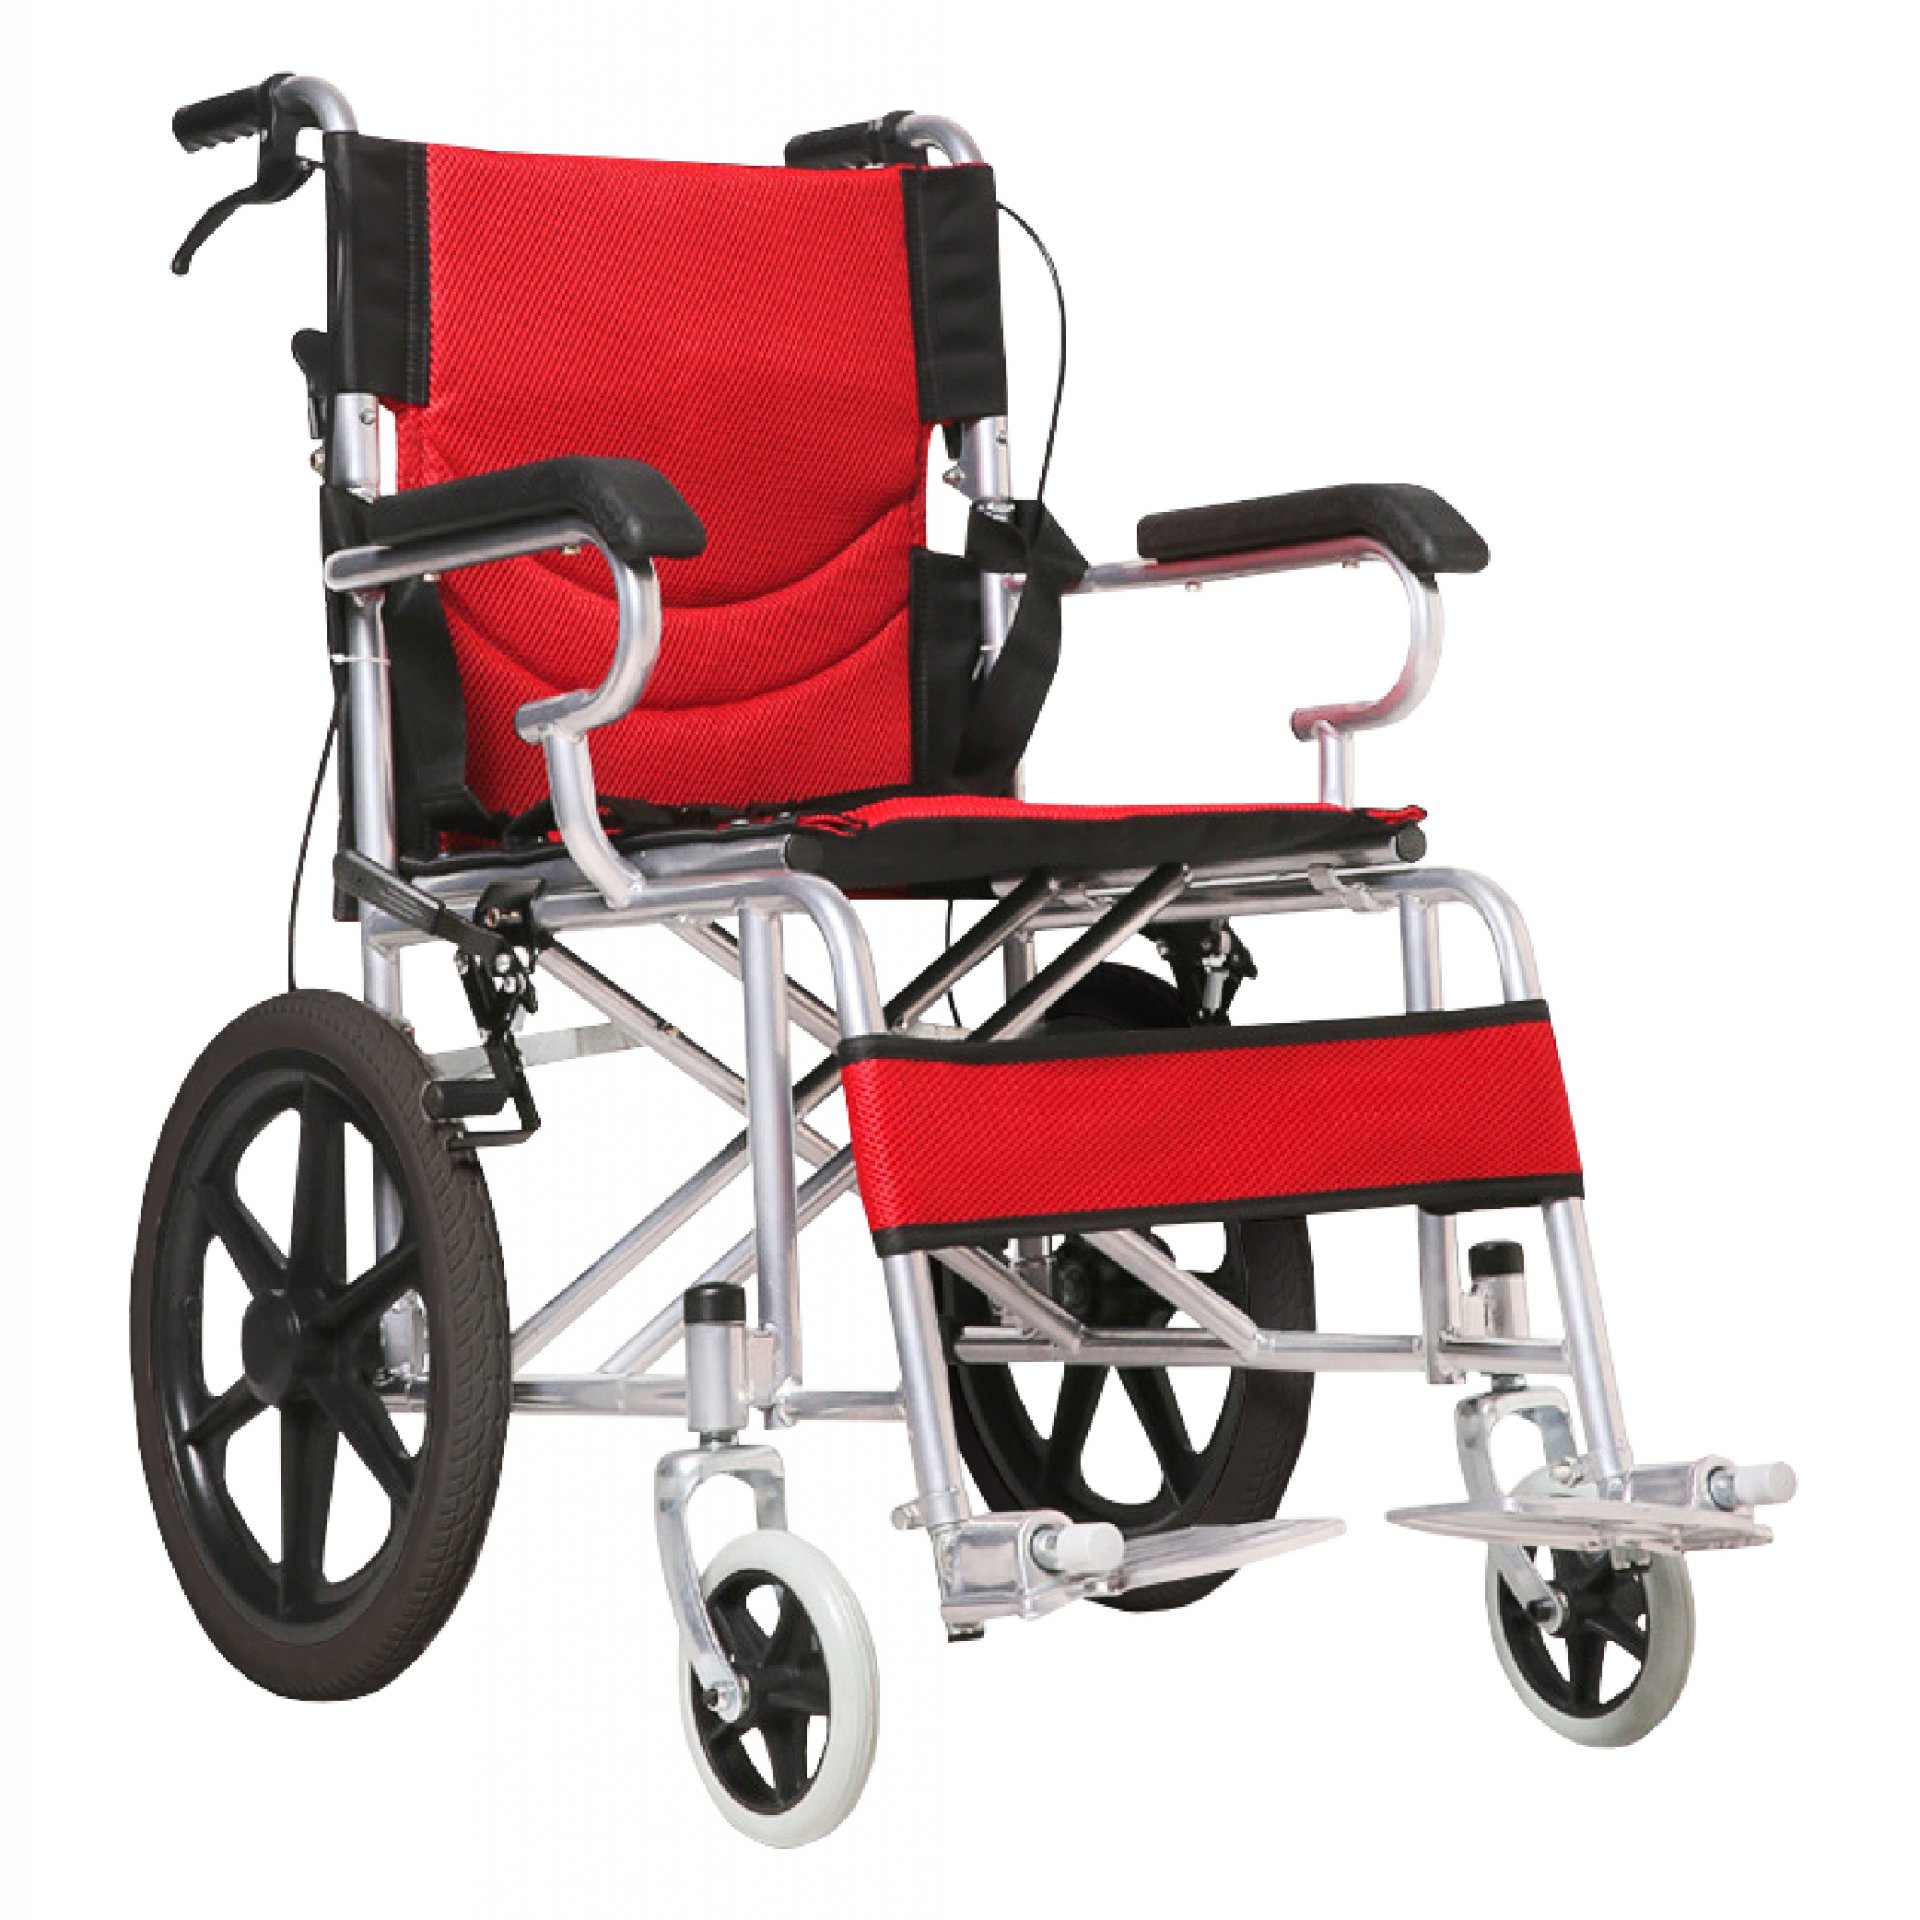 Manual wheelchair 04 [foldable] | 1 Year Warranty